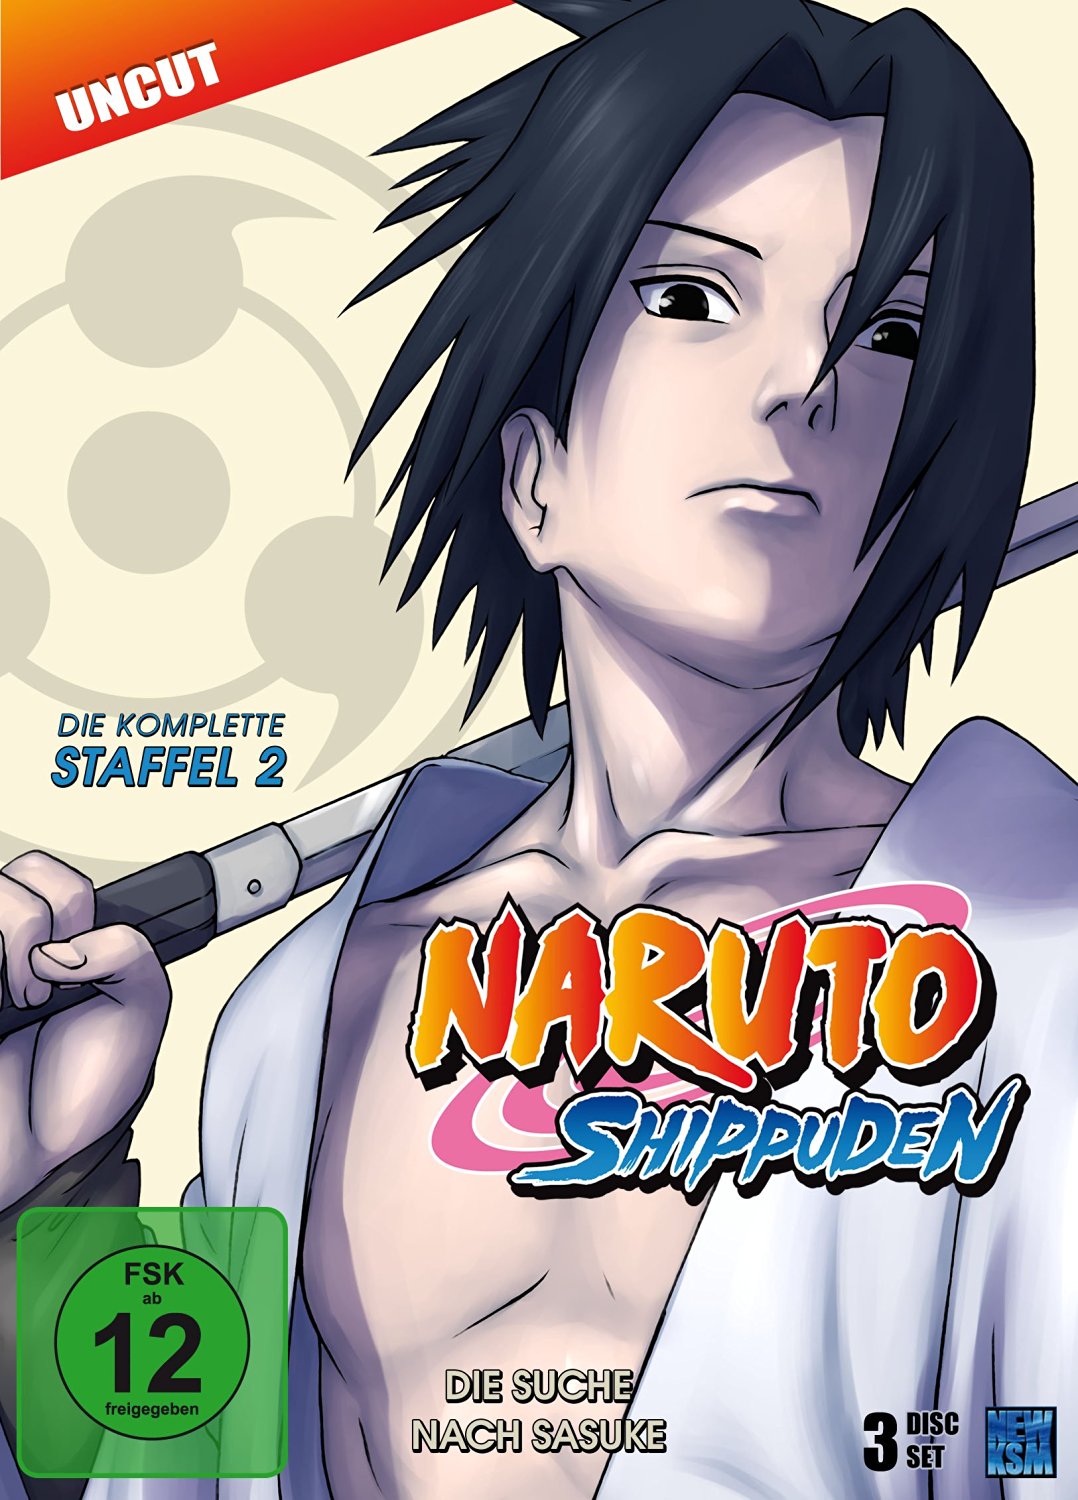 Naruto Shippuden - Staffel 2: Episode 253-273 (uncut) [DVD] Cover